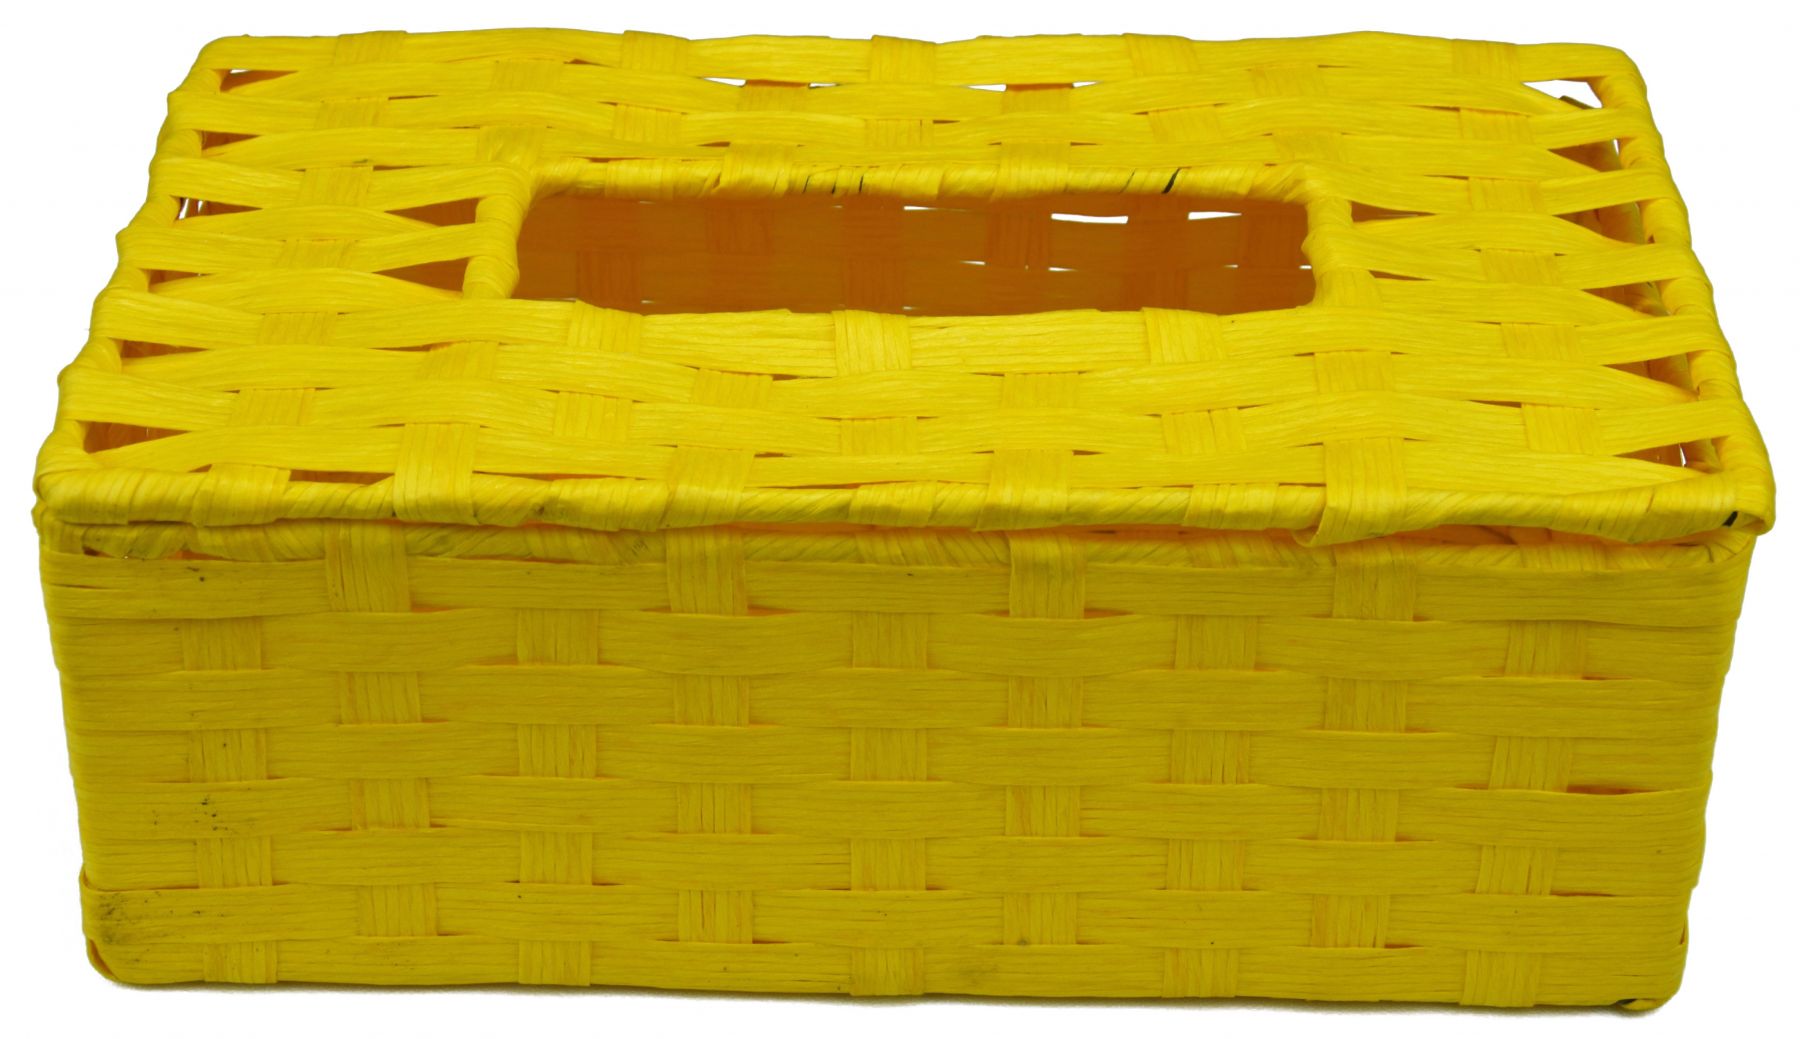 Vingo Box na kapesníky žlutý - Vingo